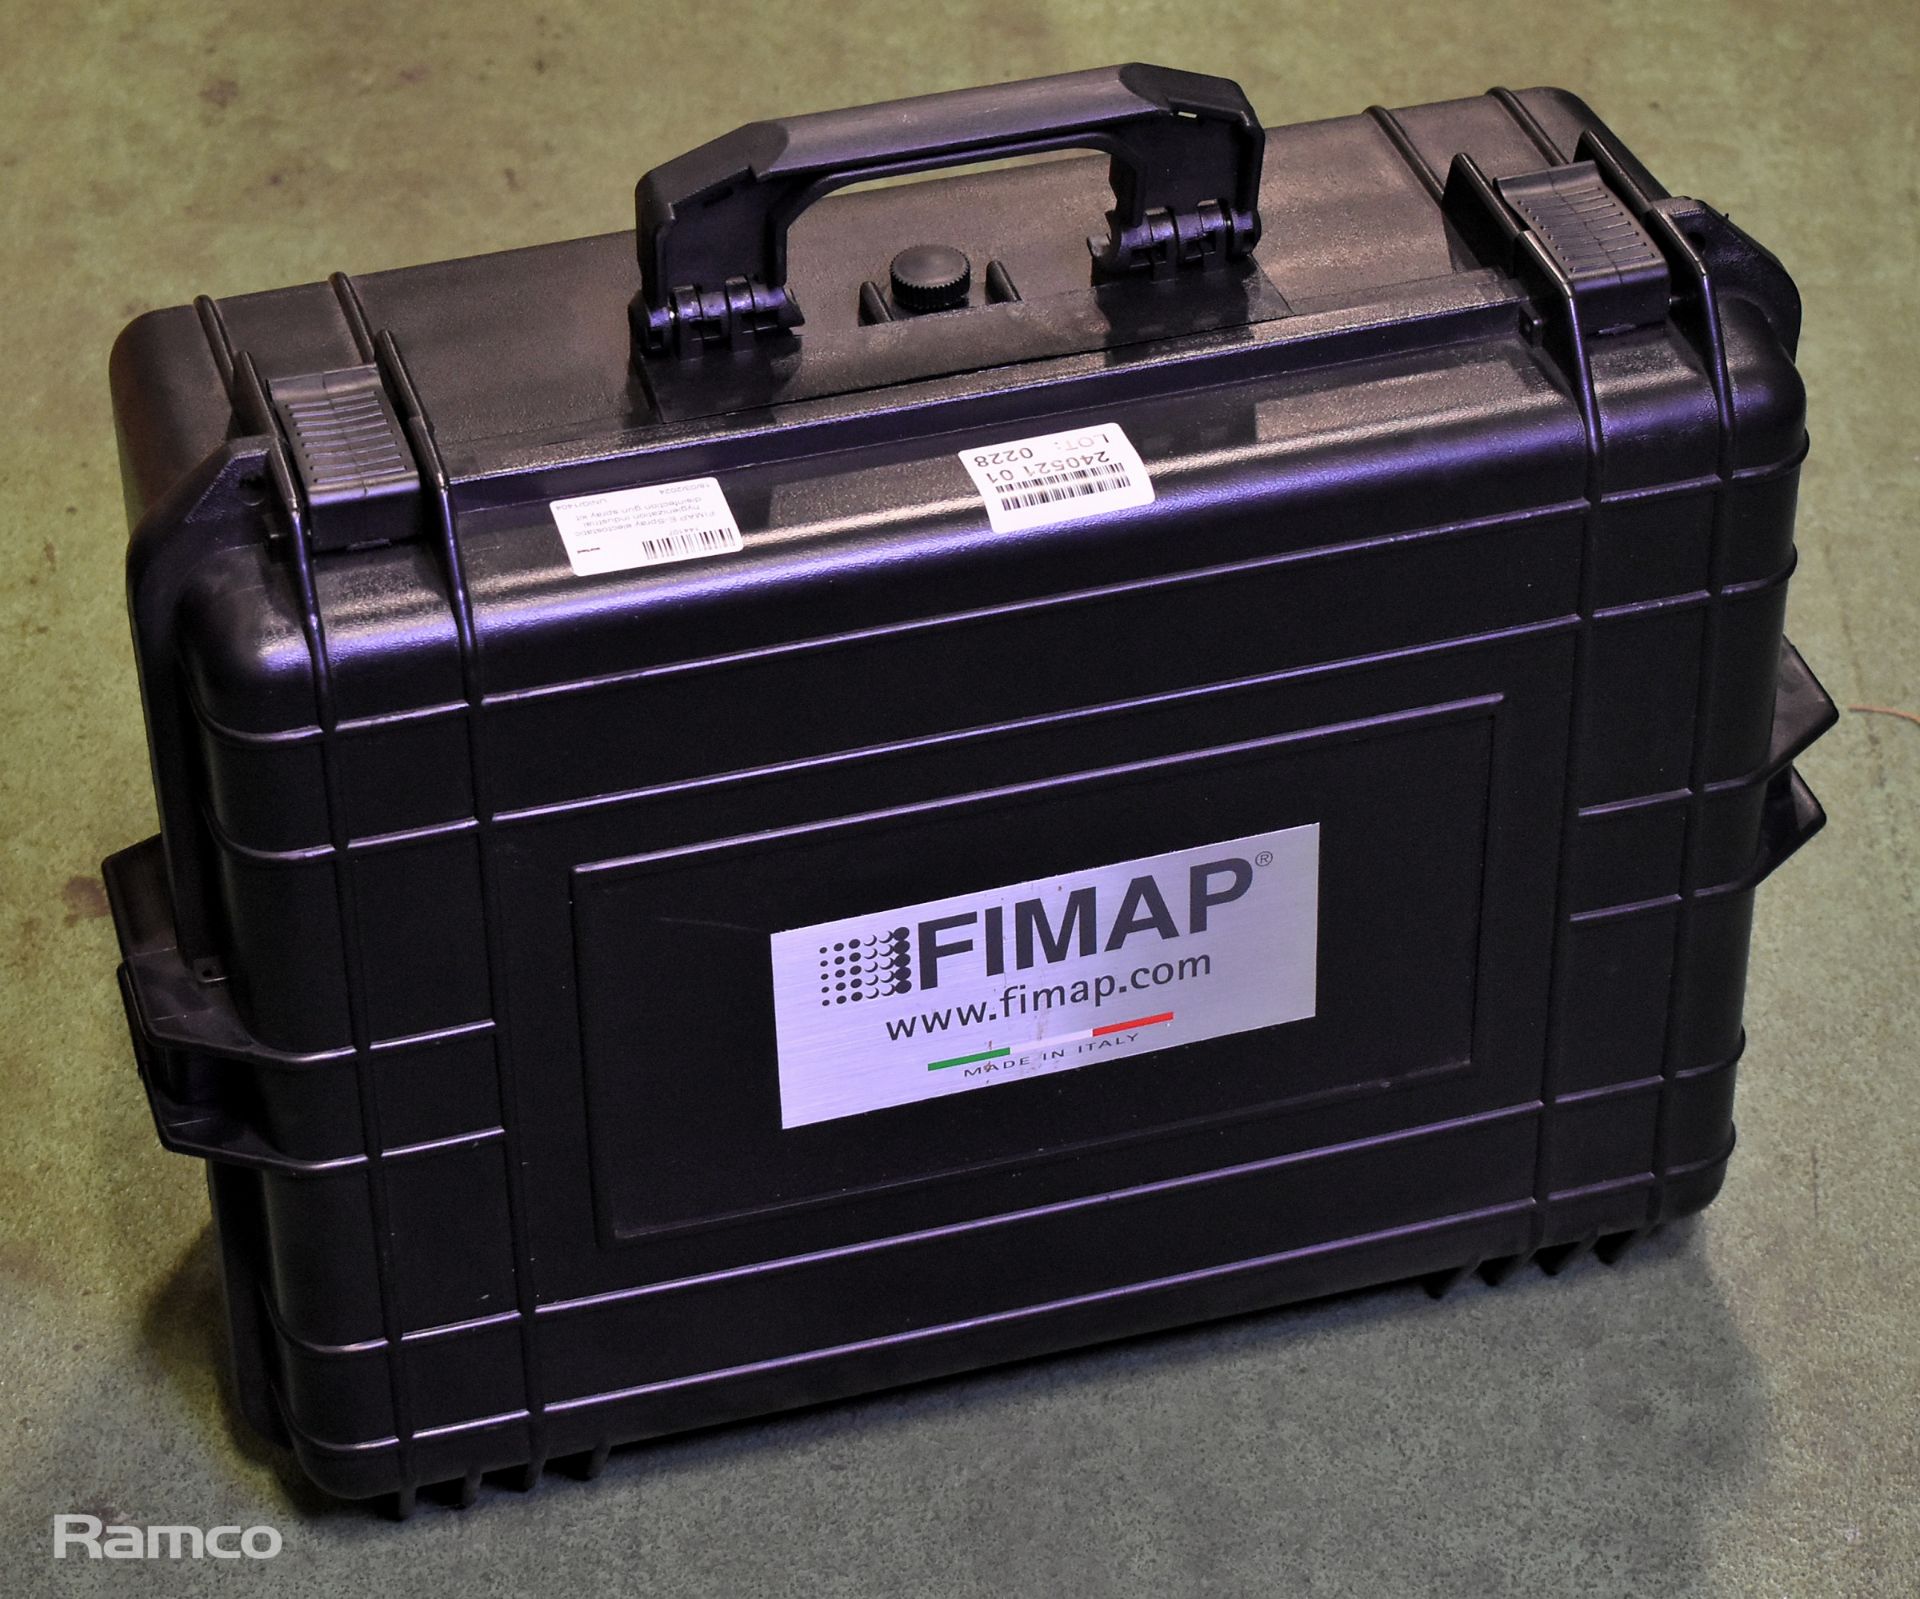 FIMAP E-Spray electrostatic hygienization industrial disinfection gun spray kit - Image 7 of 8